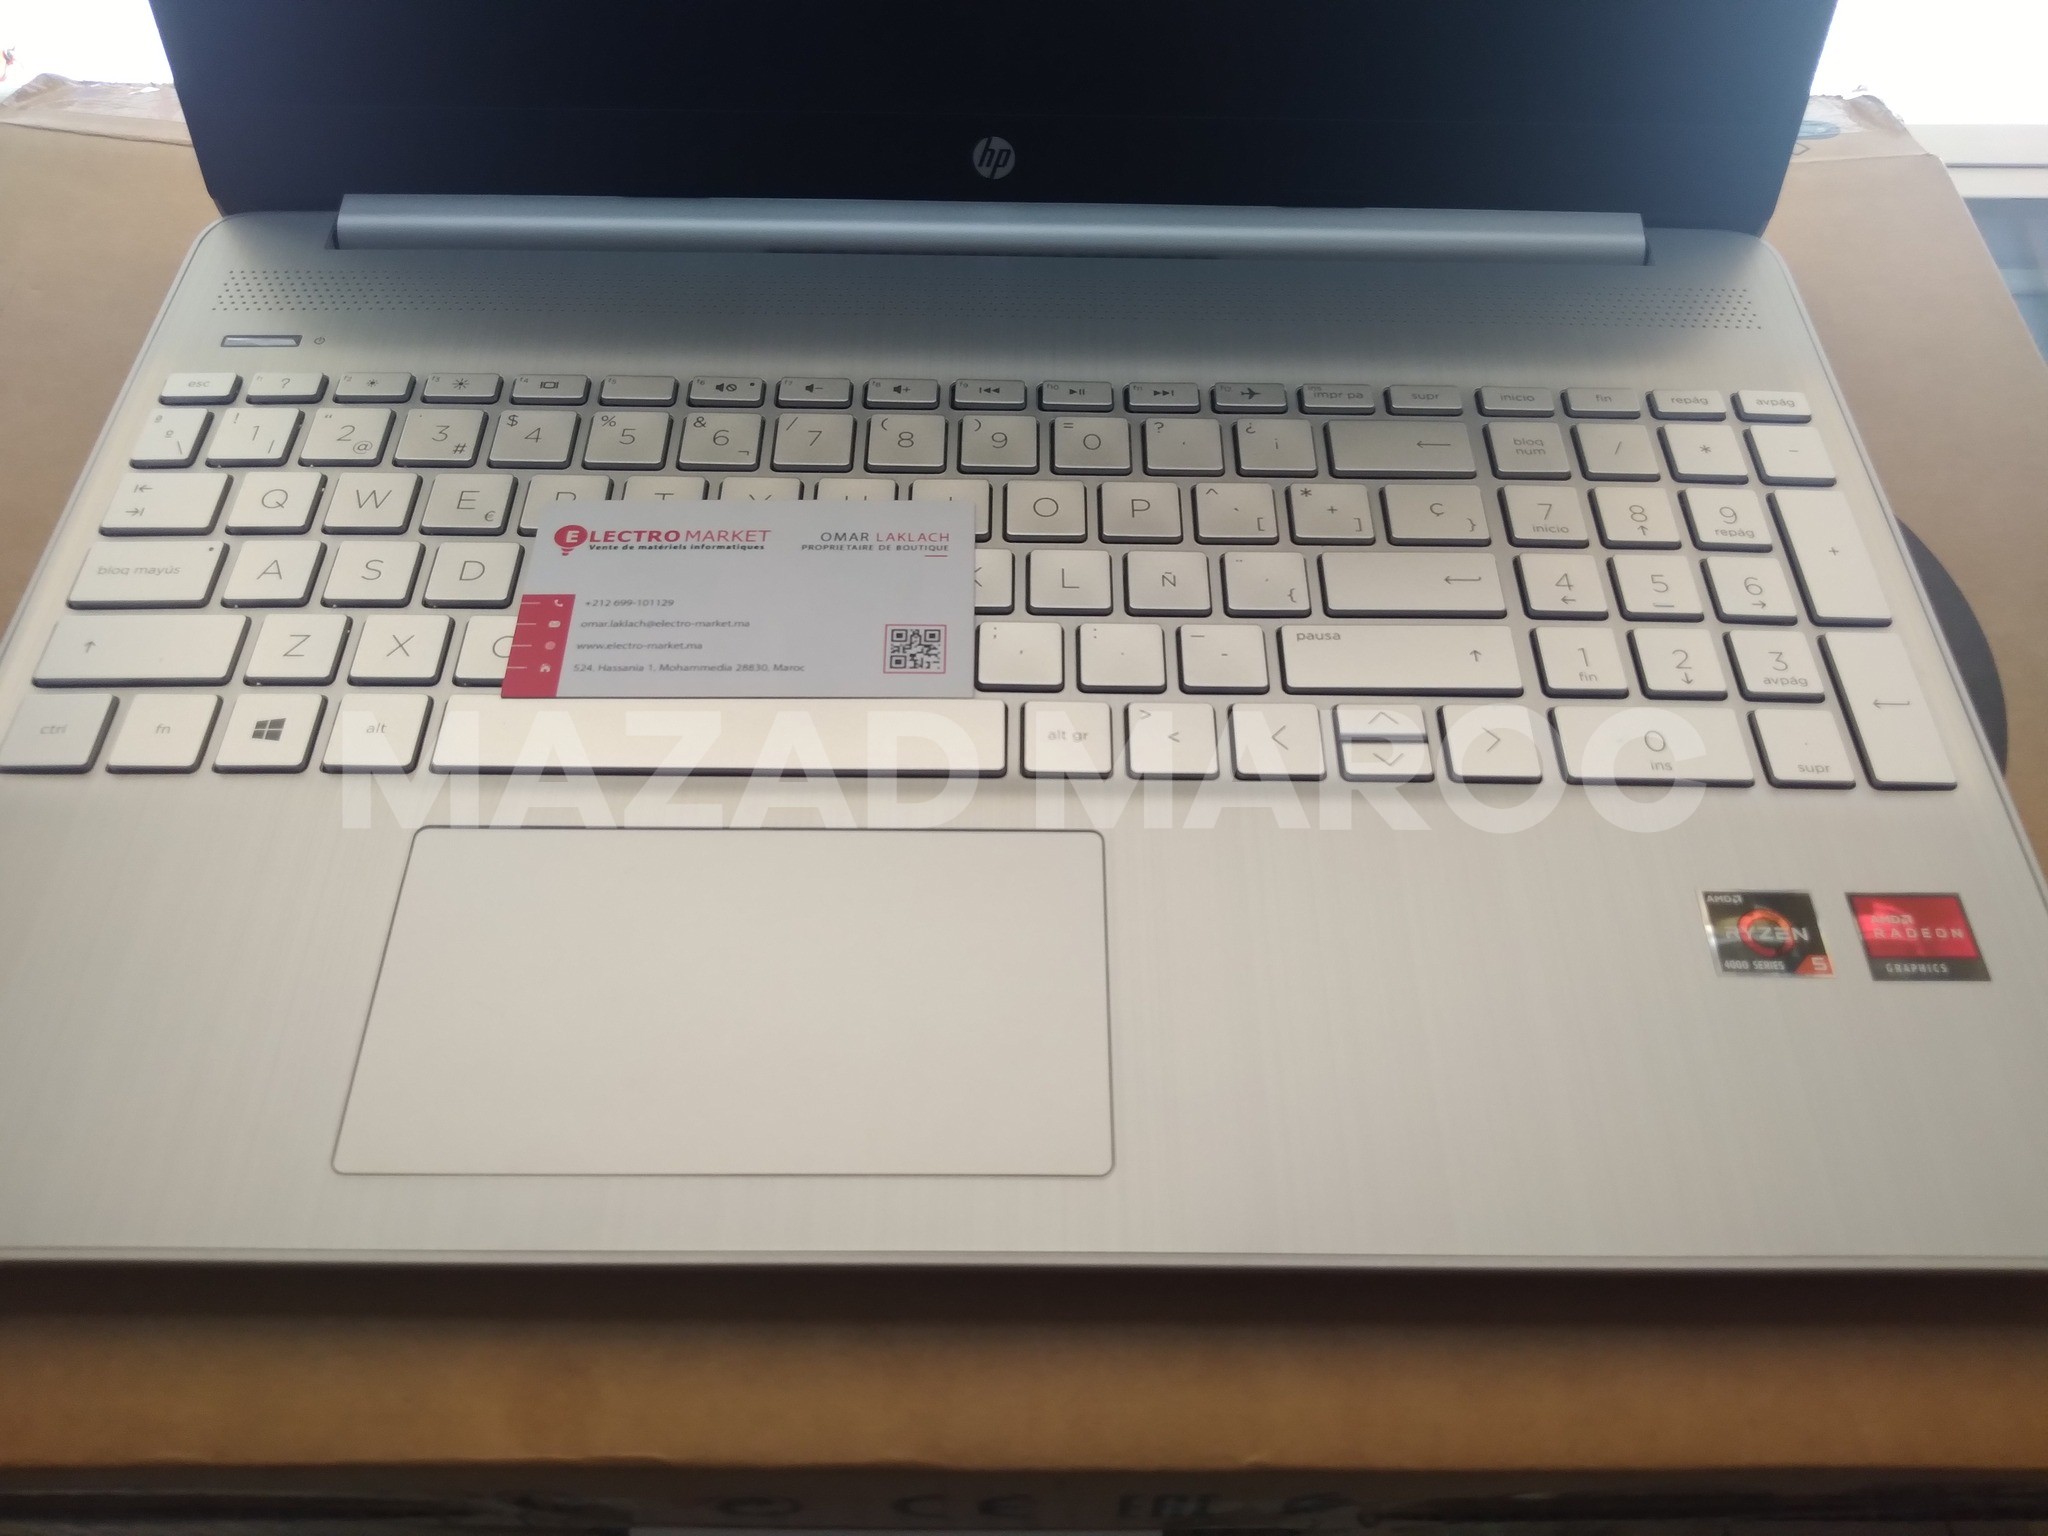 HP Laptop 15s-eq1078ns